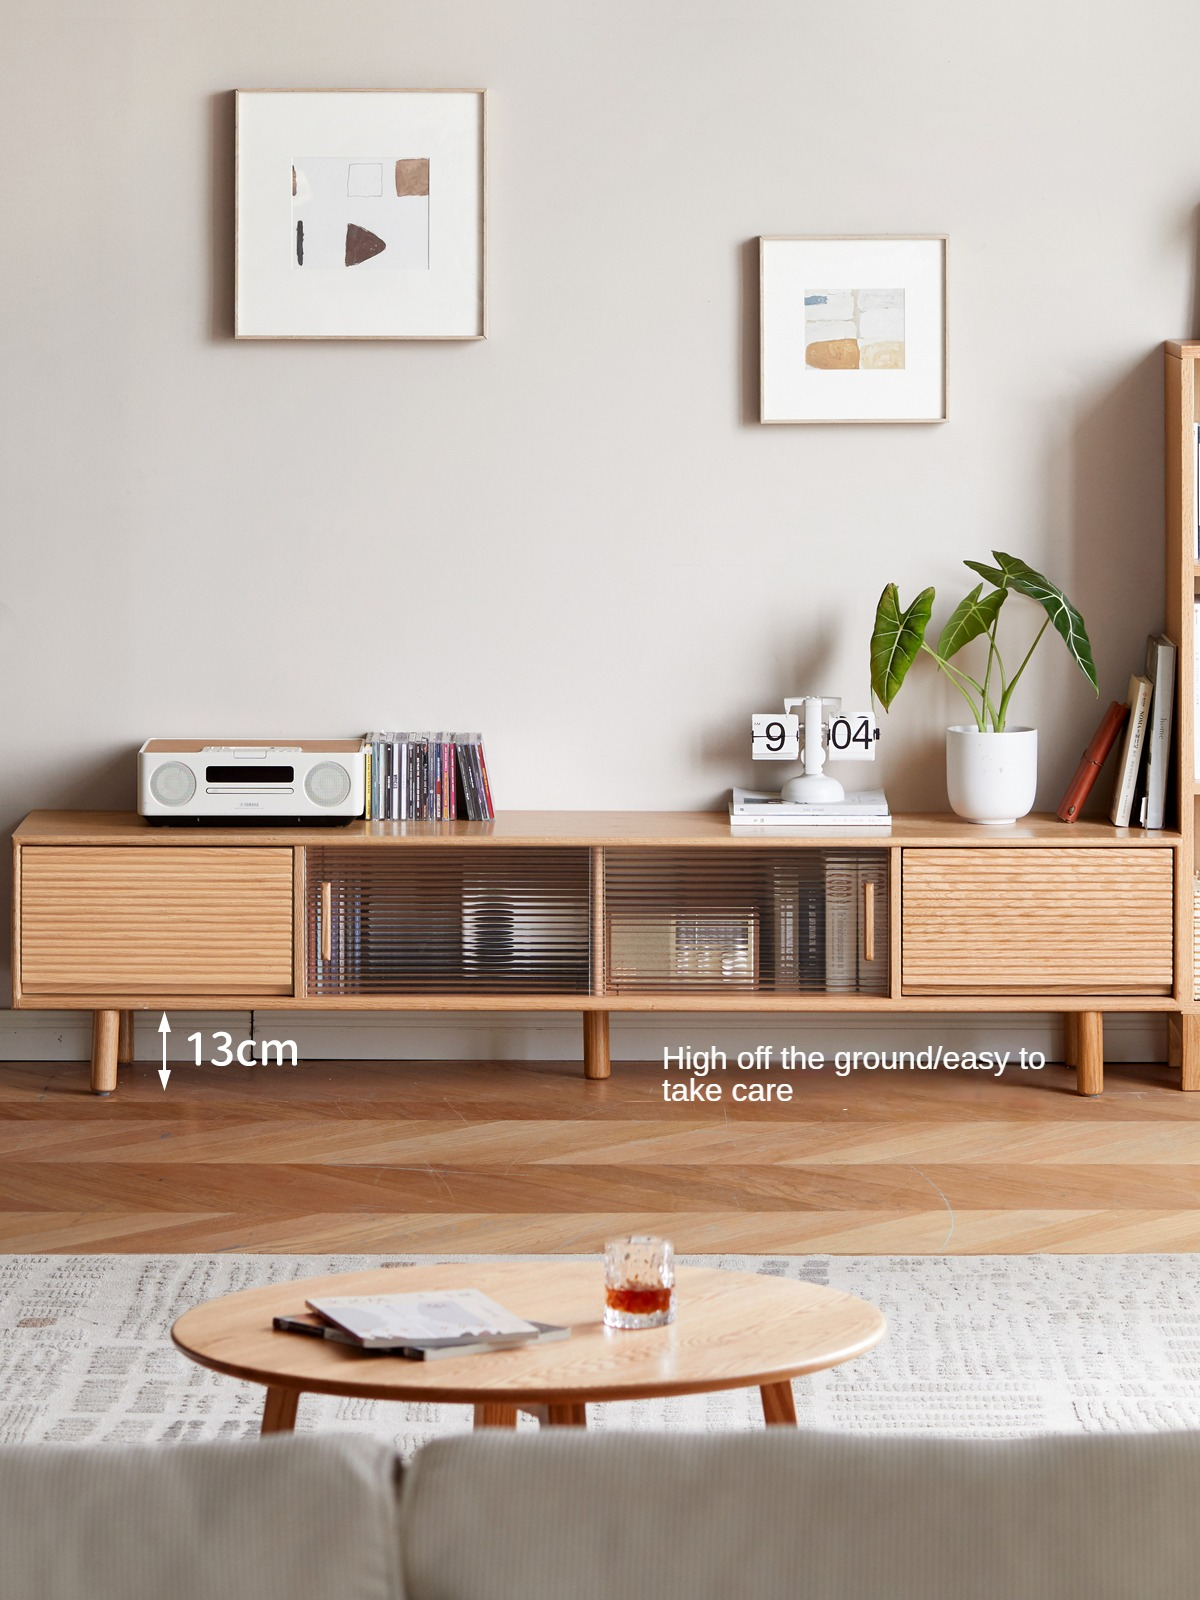 Oak Solid Wood TV Cabinet "